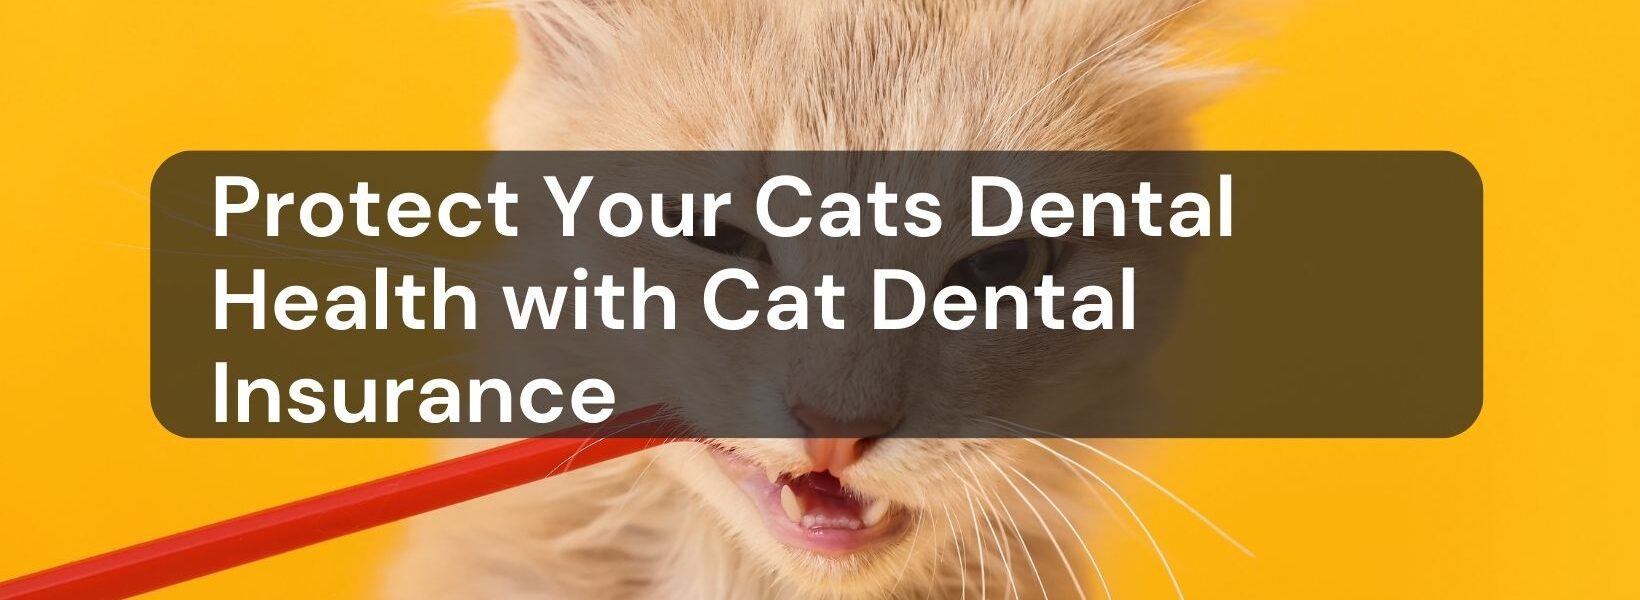 Cat Dental Insurance